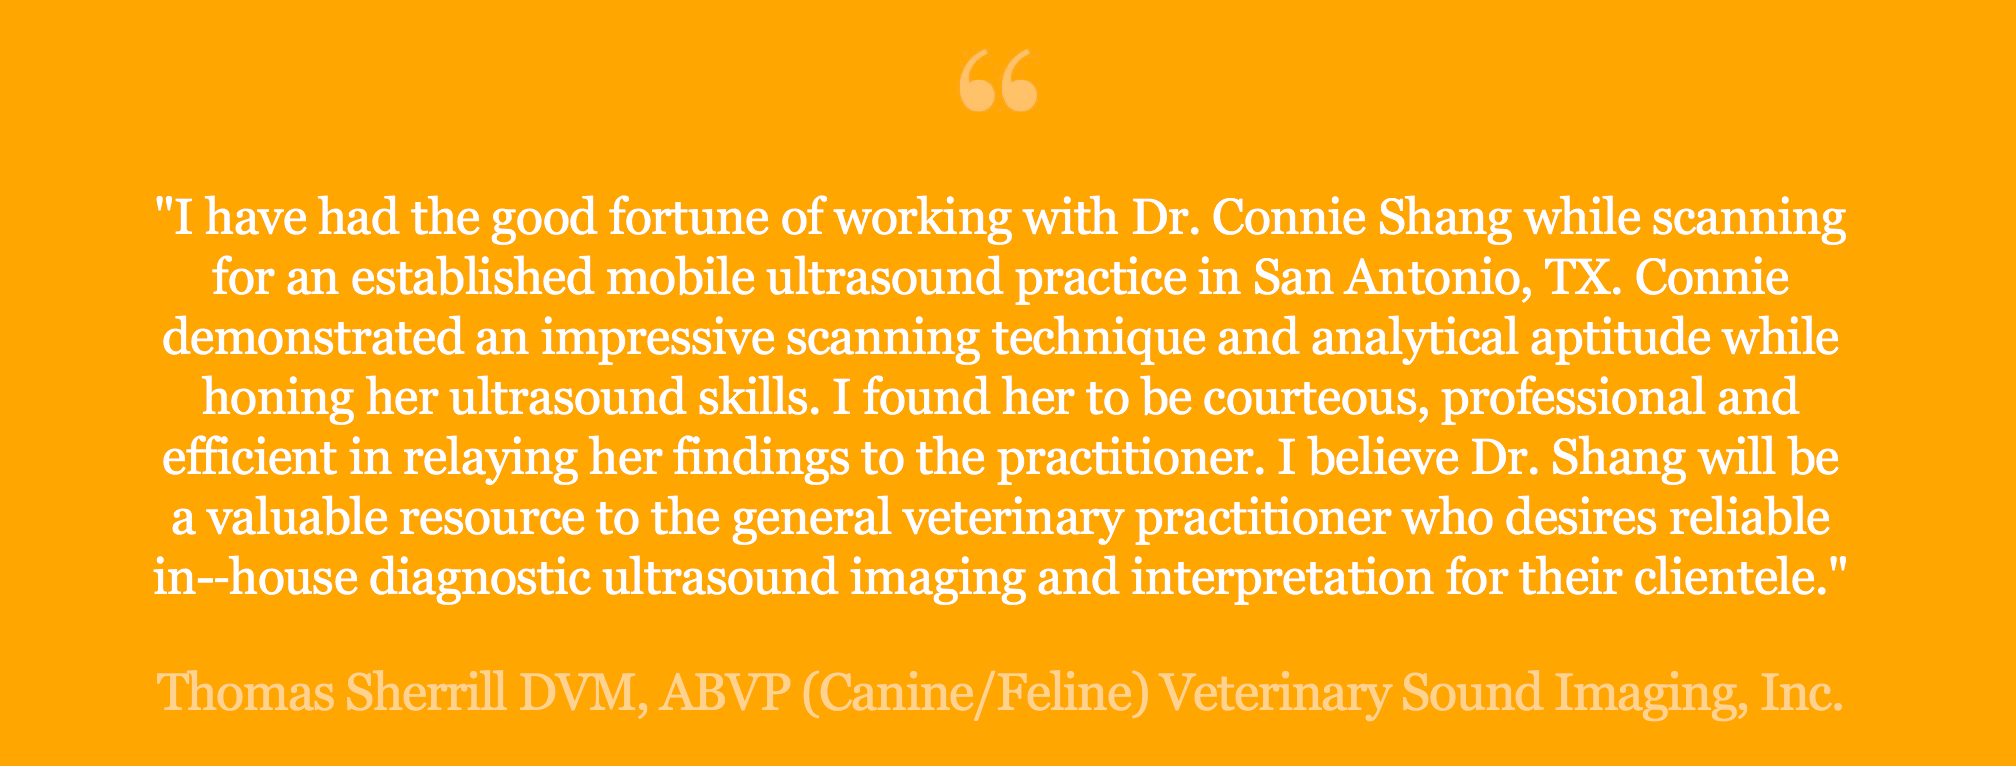 Thomas Sherrill DVM, ABVP (Canine/Feline) (Veterinary Sound Imaging, Inc.) (Copy)